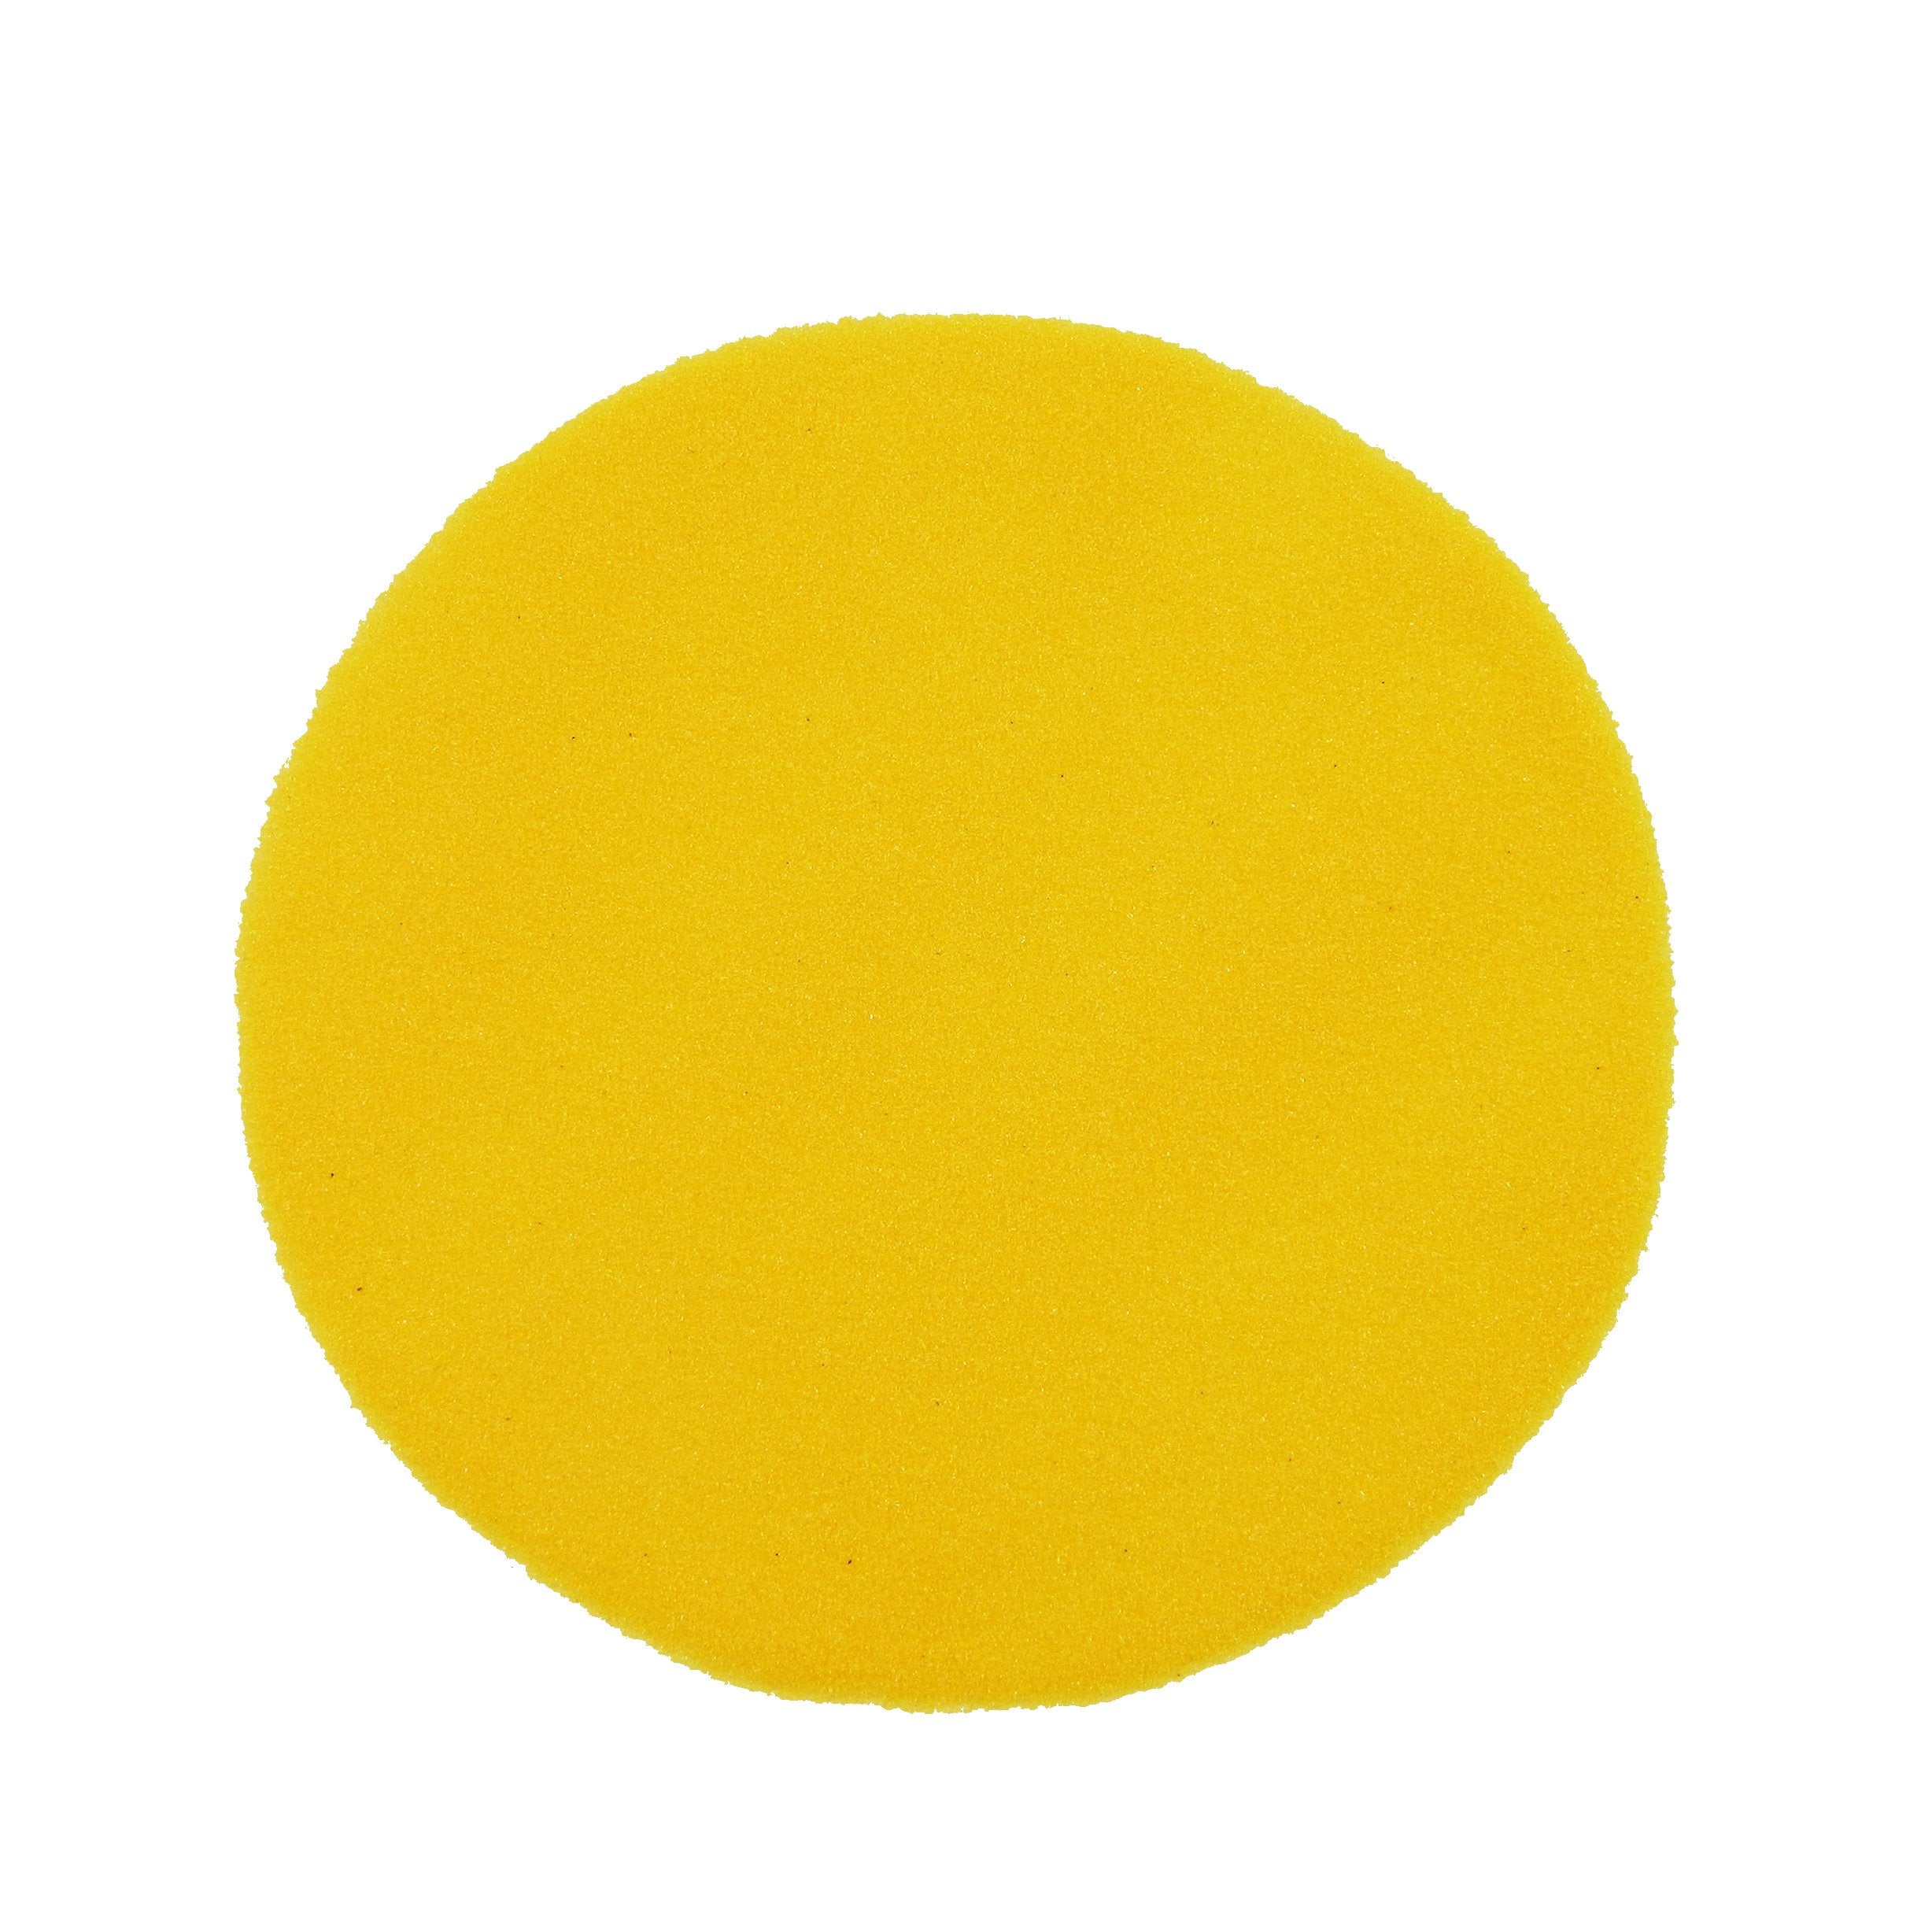 Art Sand - 200g Bag - Choose Your Colour (Golden Yellow)